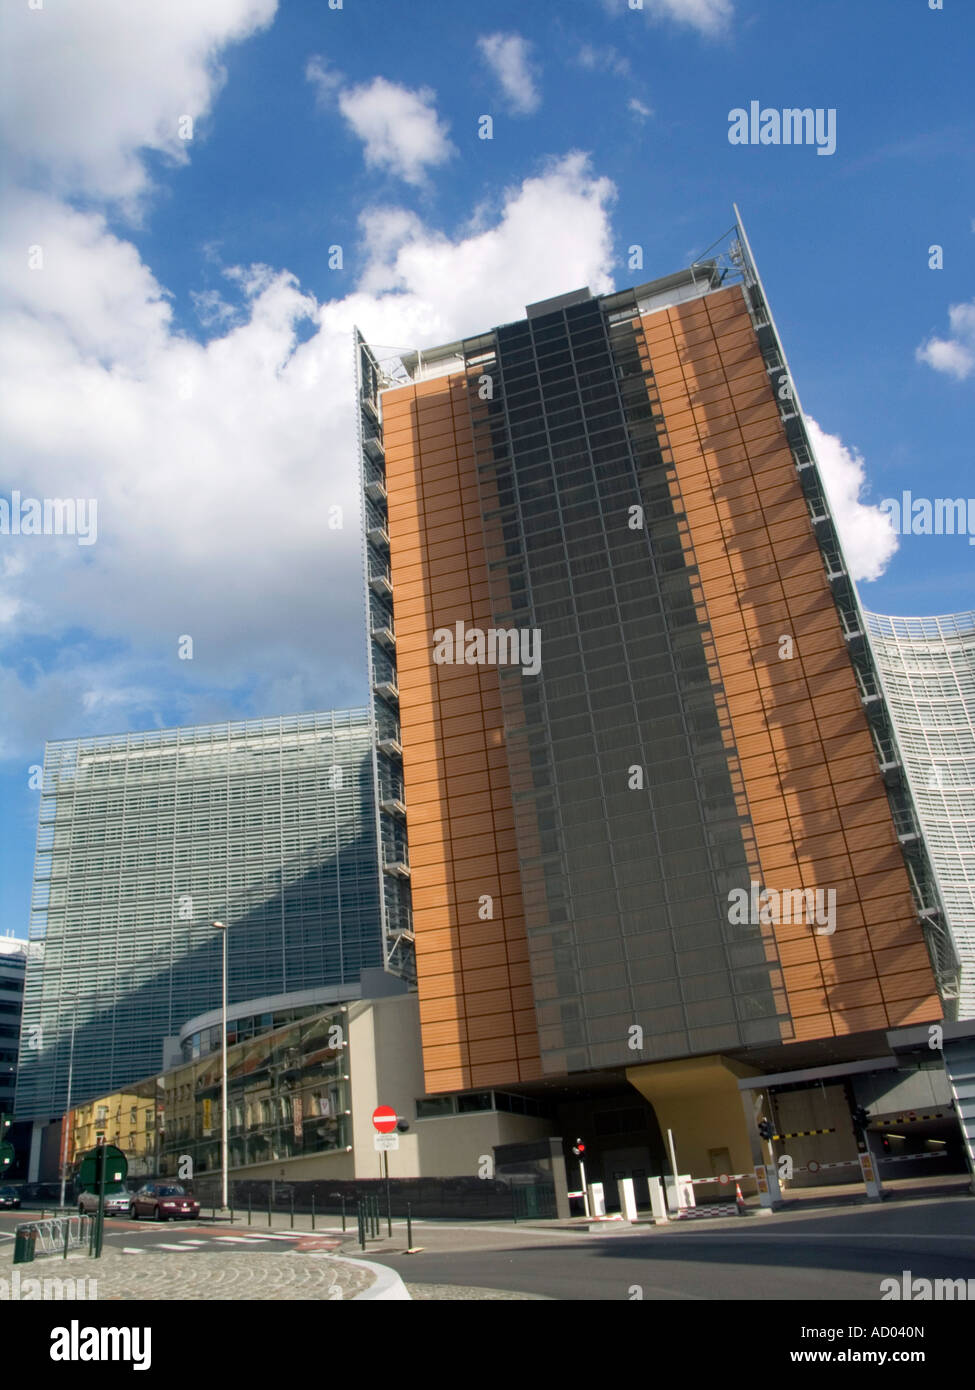 The Berlaymont building on Schuman platz Rue de la Loi in Brussels Belgium is the headquarter of the European Commission Stock Photo